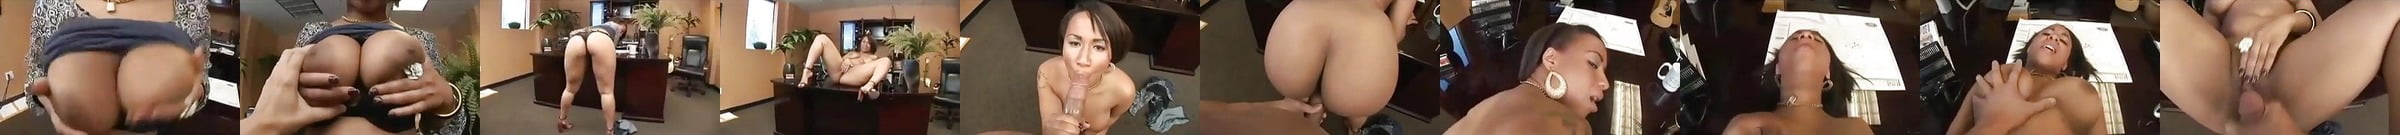 Black Gf Interracial Couple Make A Sex Tape Free Porn C4 Xhamster